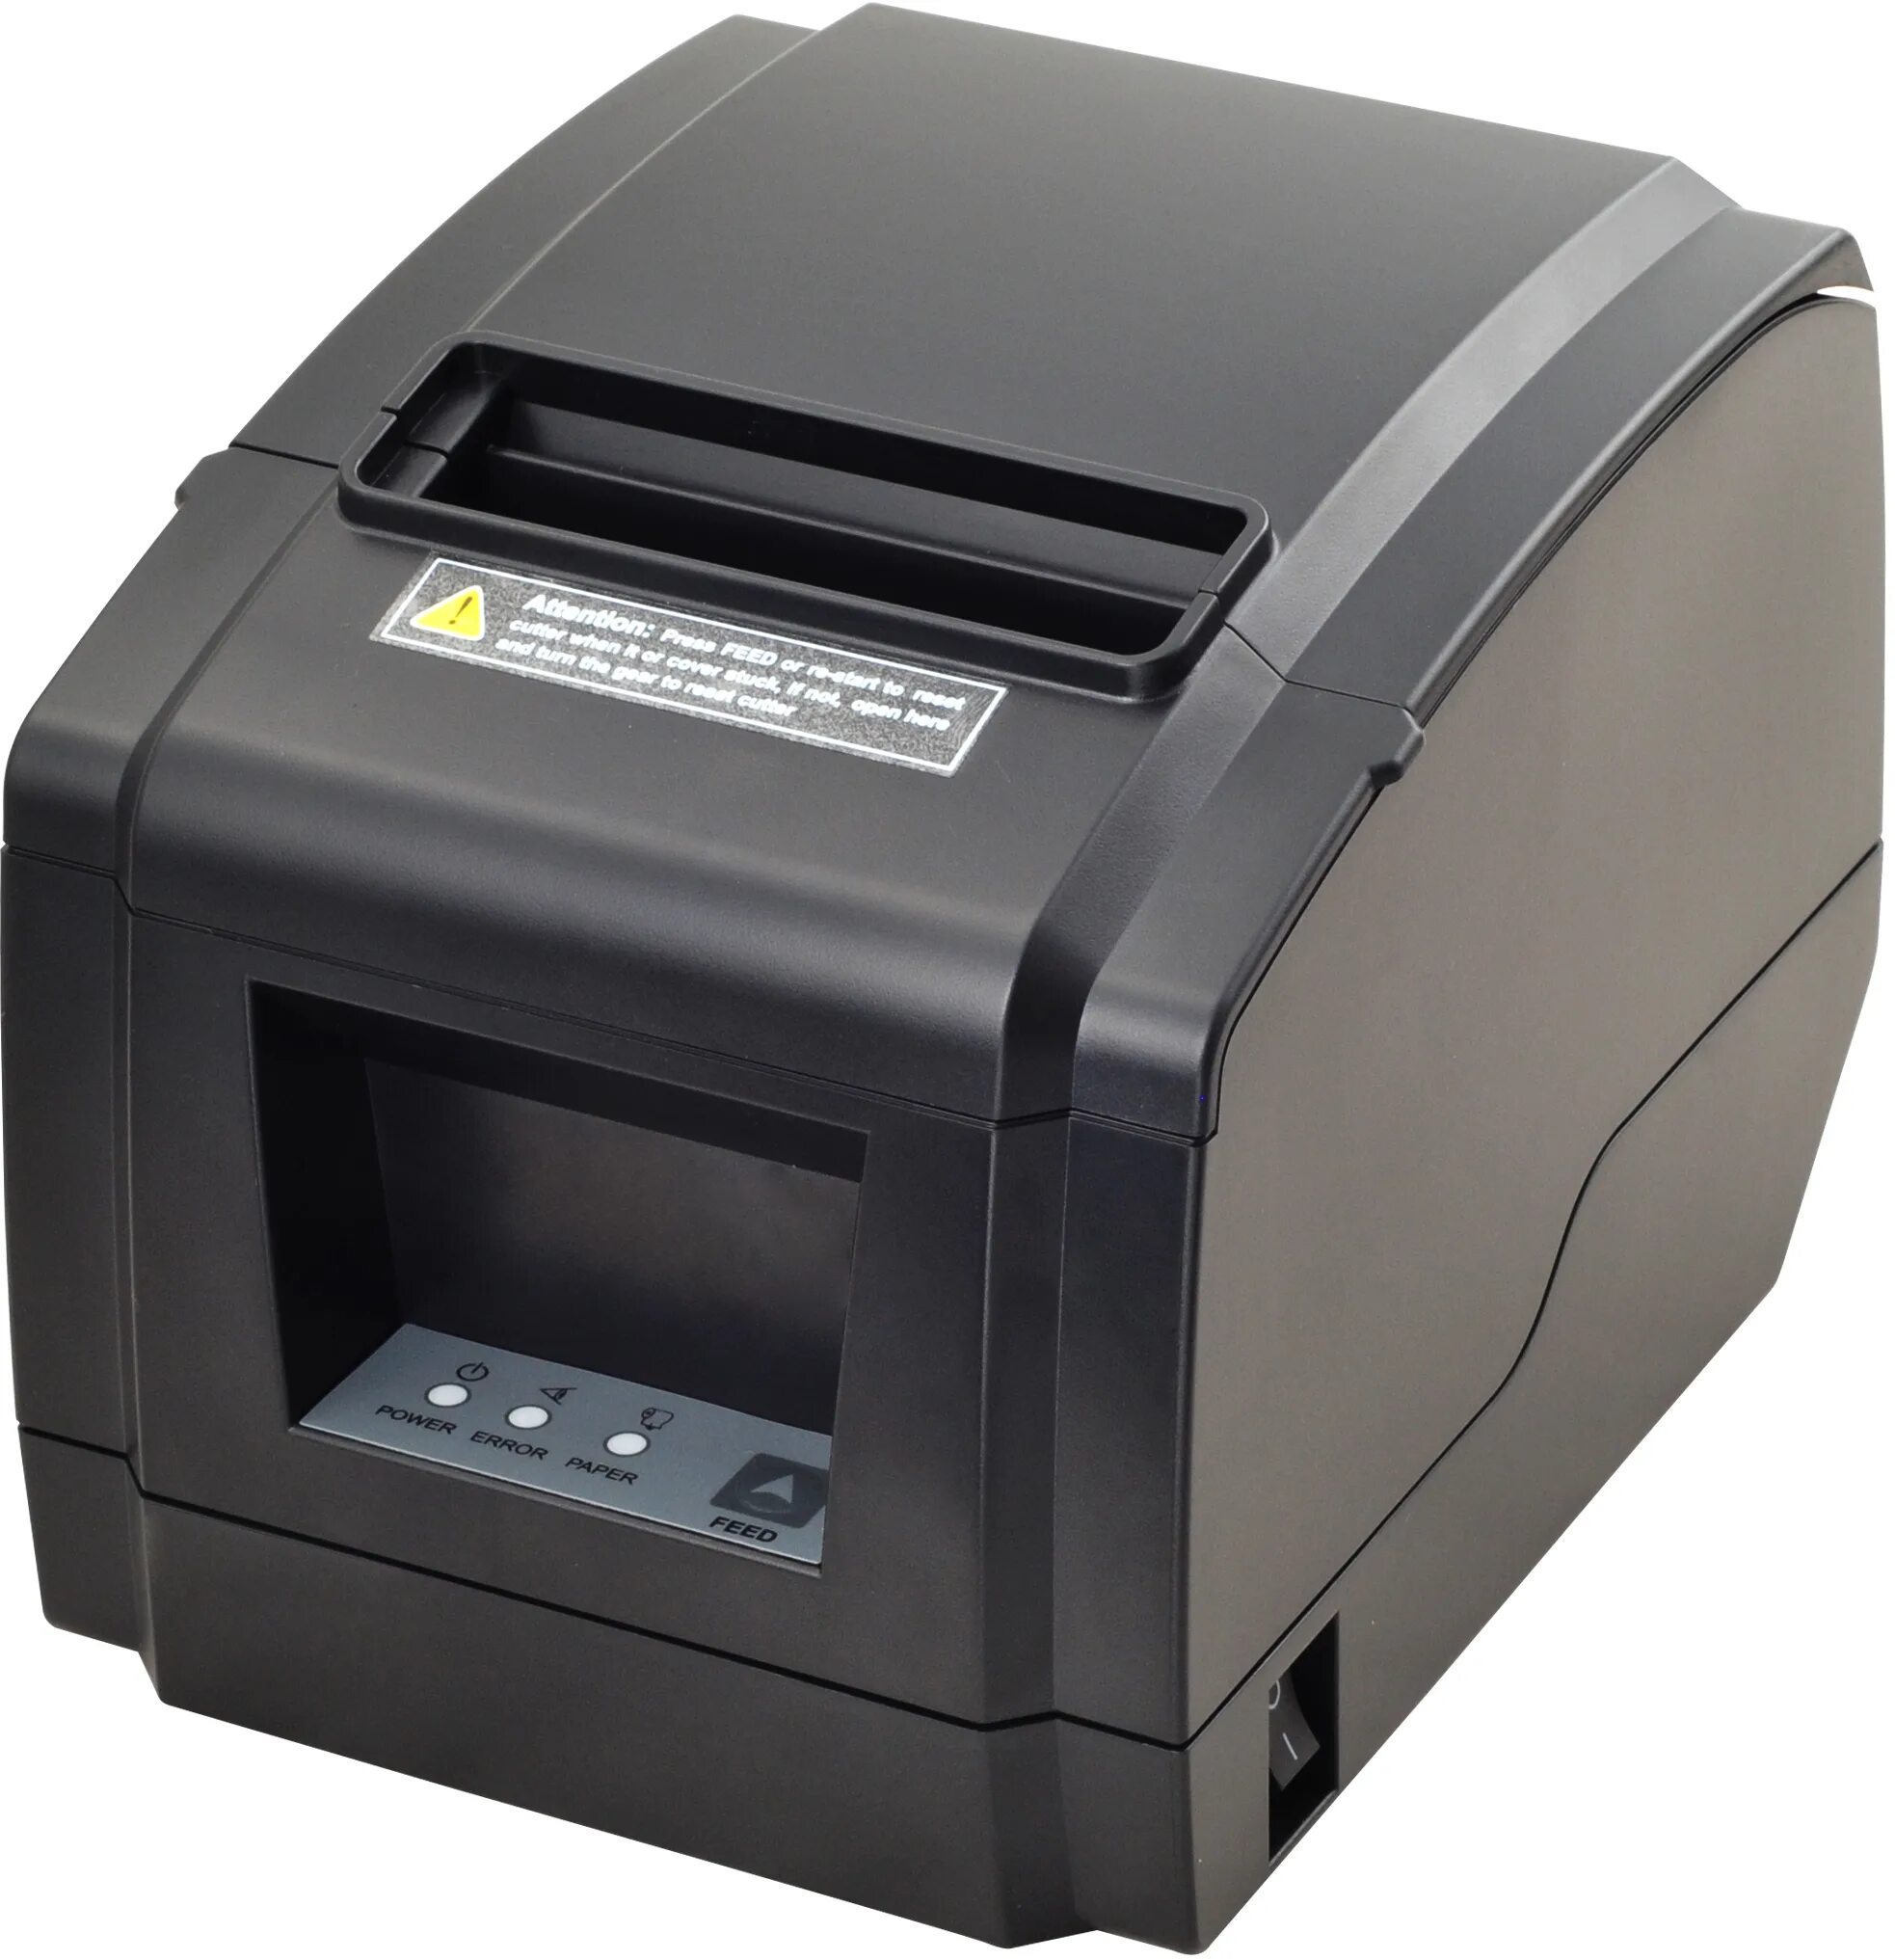 Принтеры терминал. Термопринтер qr204. Термопринтер BSMART Printer BS-350. POS 80 Termal Printer. Термопринтер Xprinter x-236.